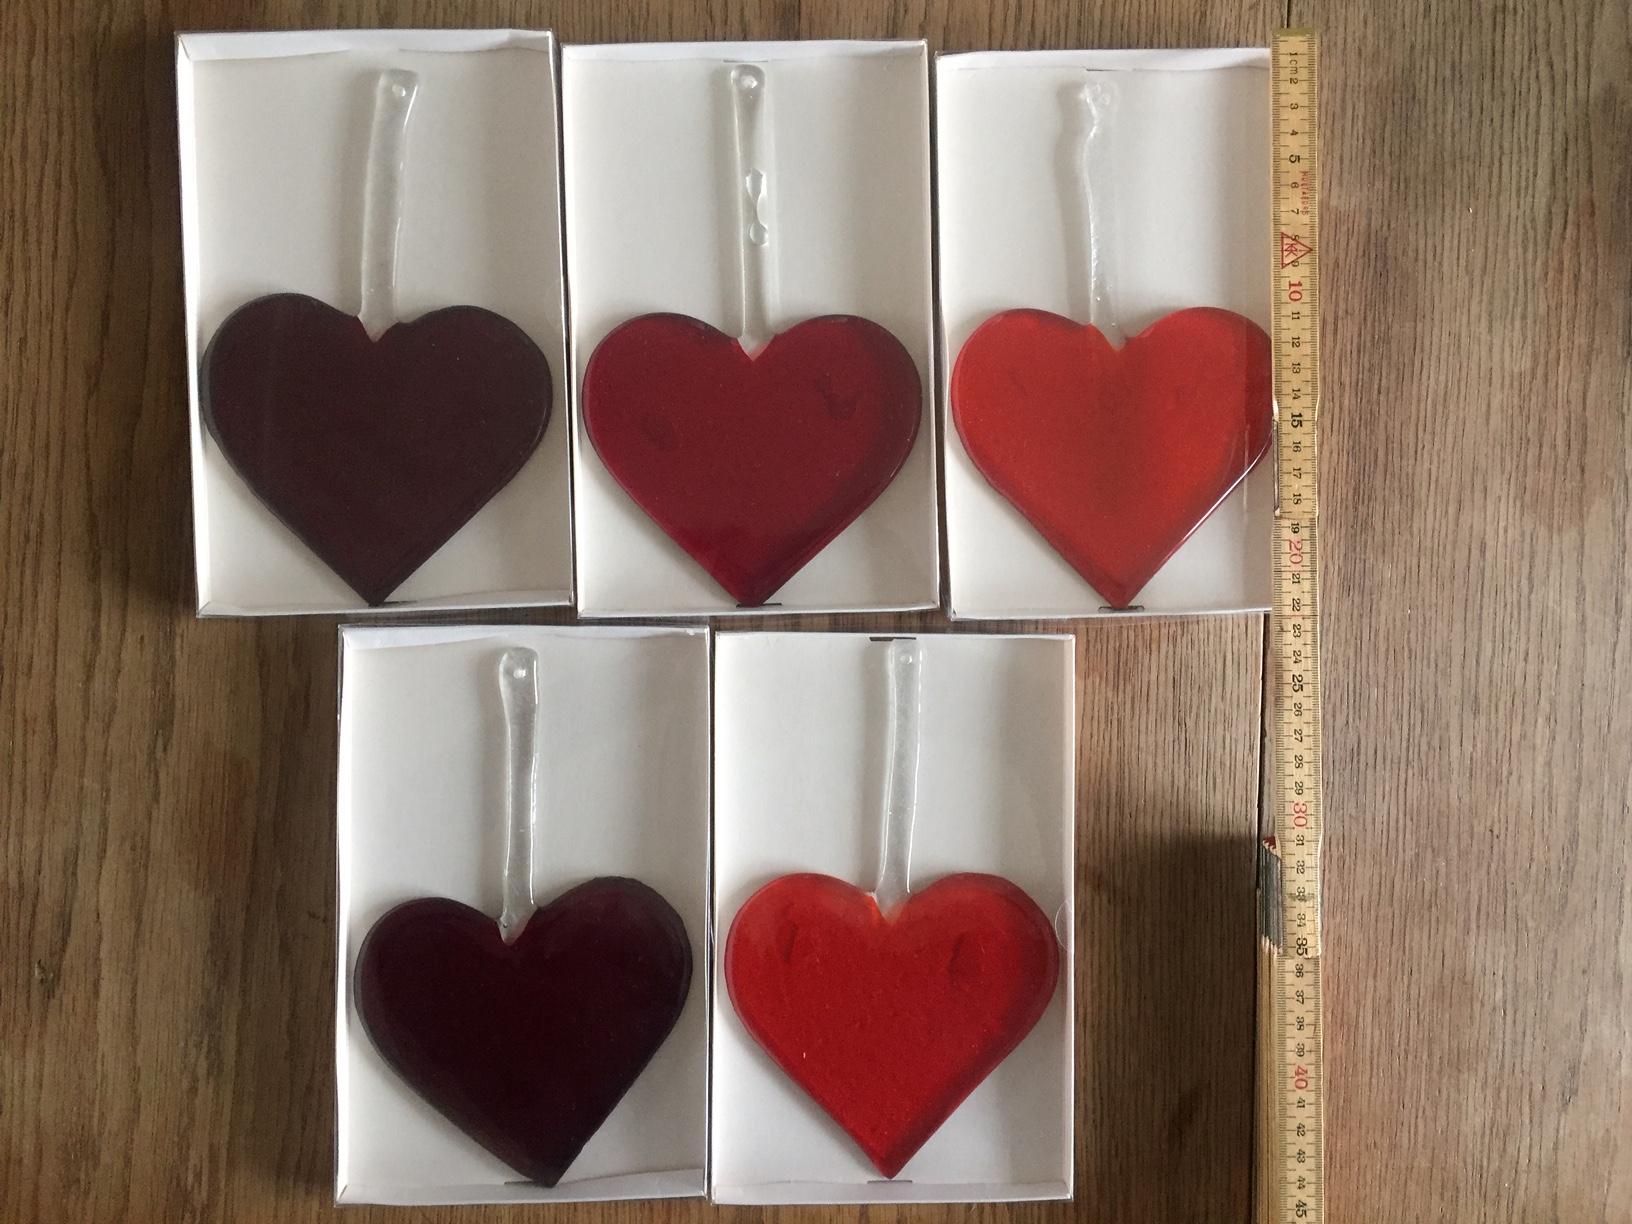 Contemporary Handmade Christmas Glass Heart Ornaments from Denmark